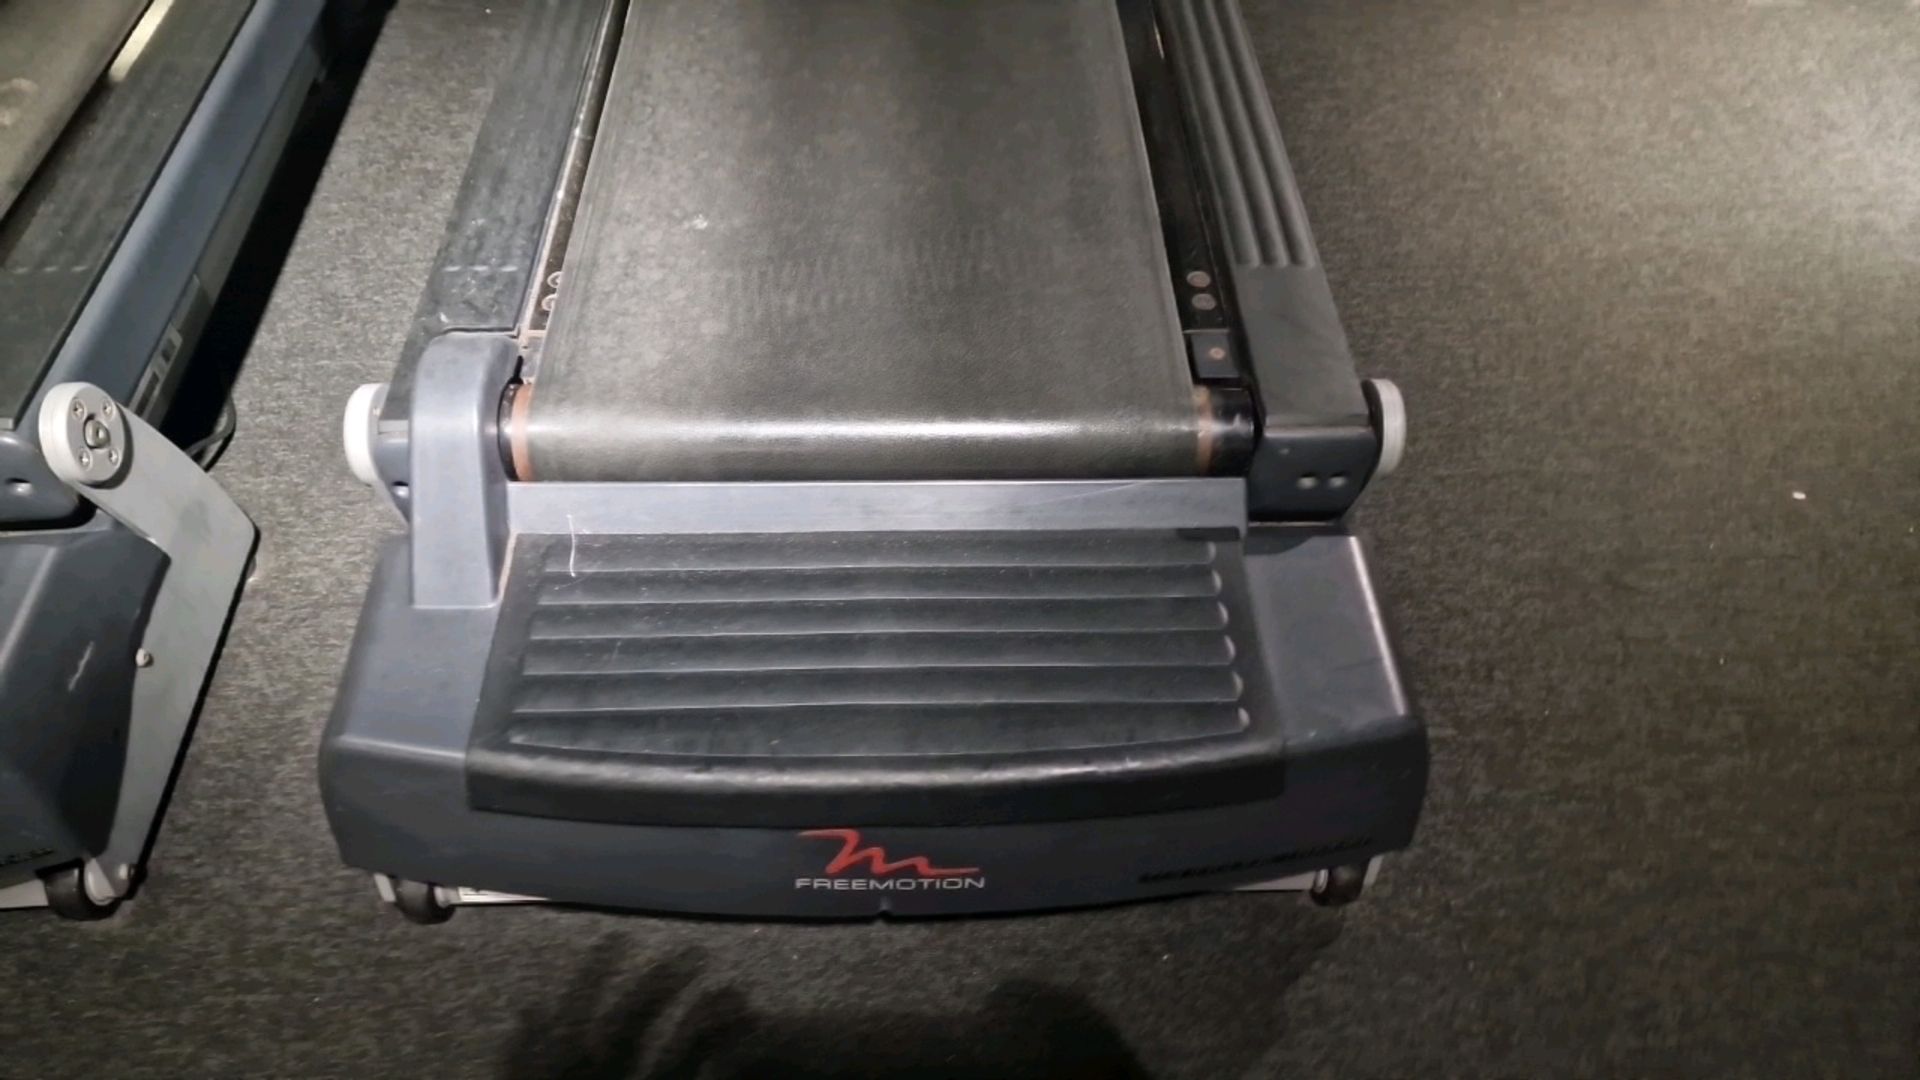 Freemotion Treadmill - Image 3 of 7